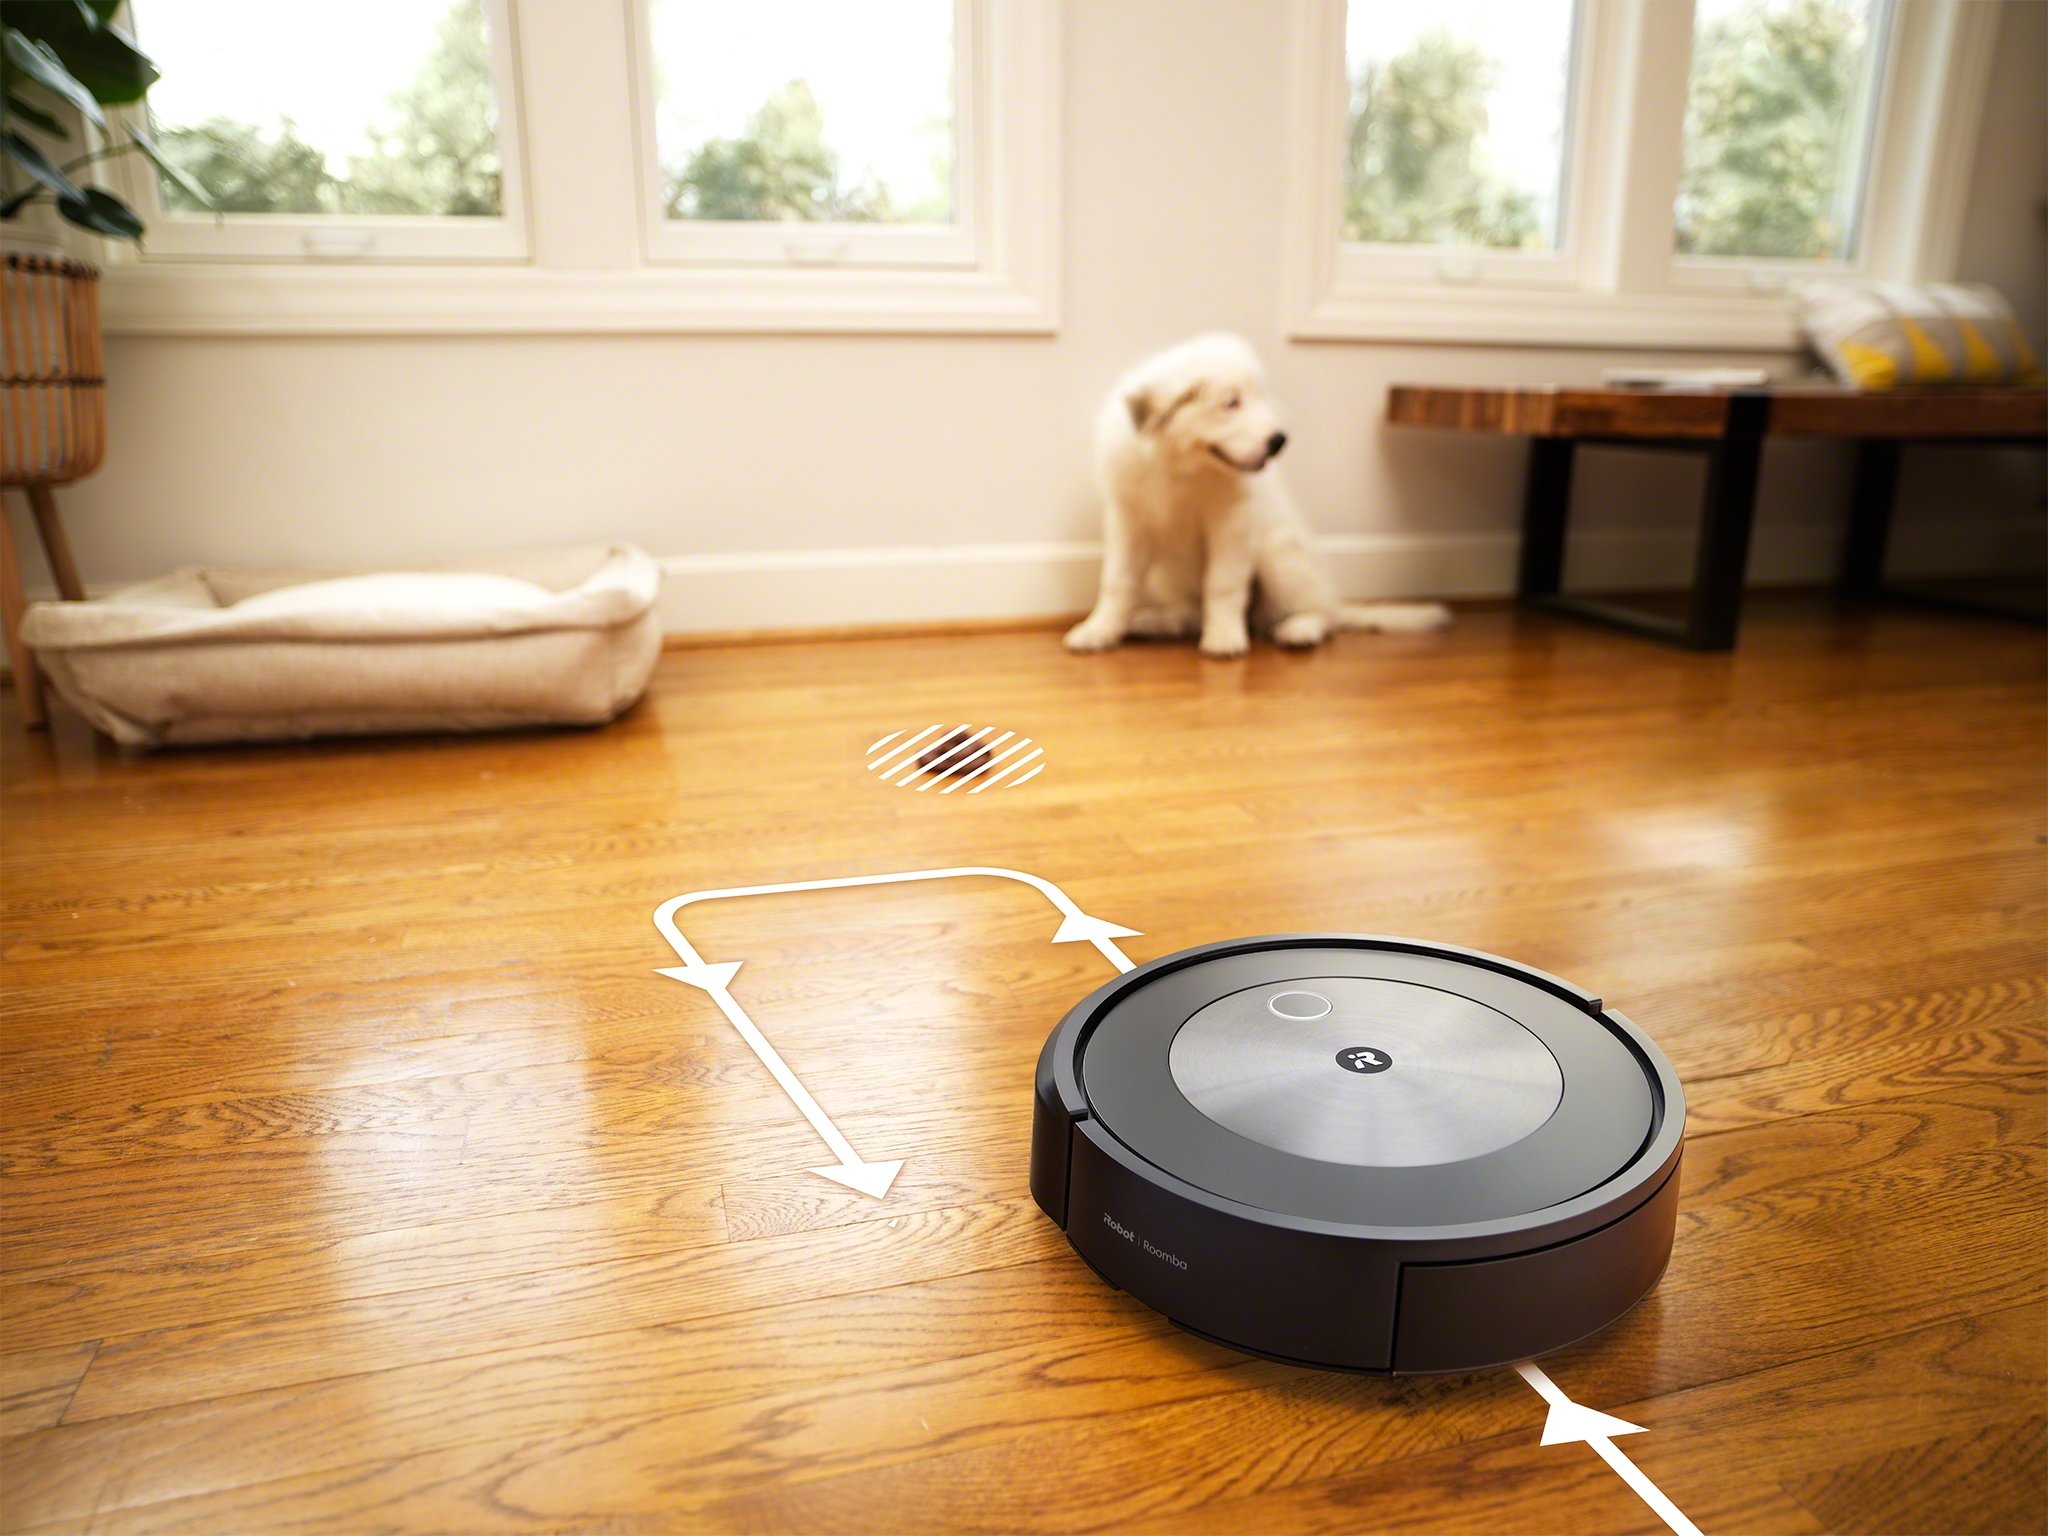 Amazon to acquire Roomba maker iRobot for $1.7 billion